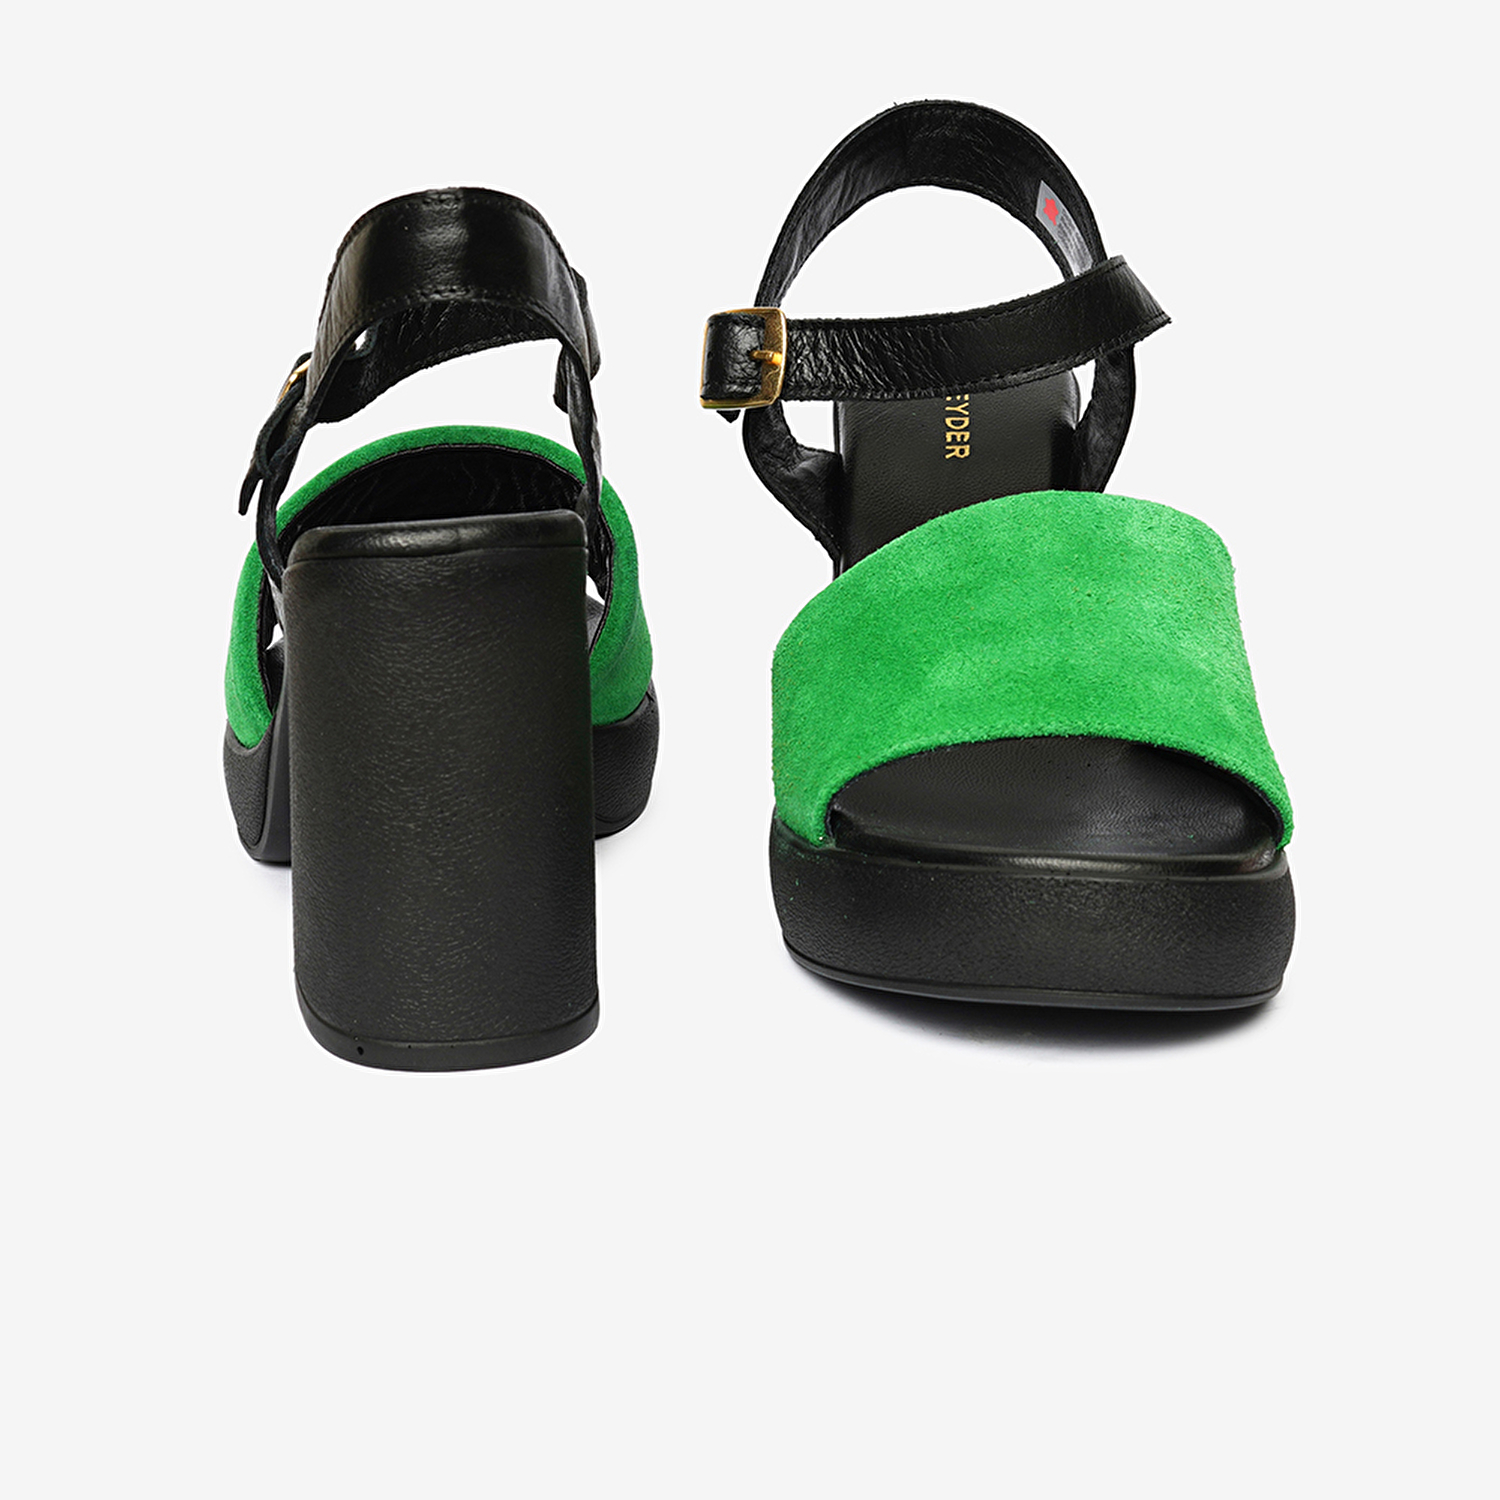 Kadın Siyah Yeşil Hakiki Deri Sandalet 4Y2TS59010-7